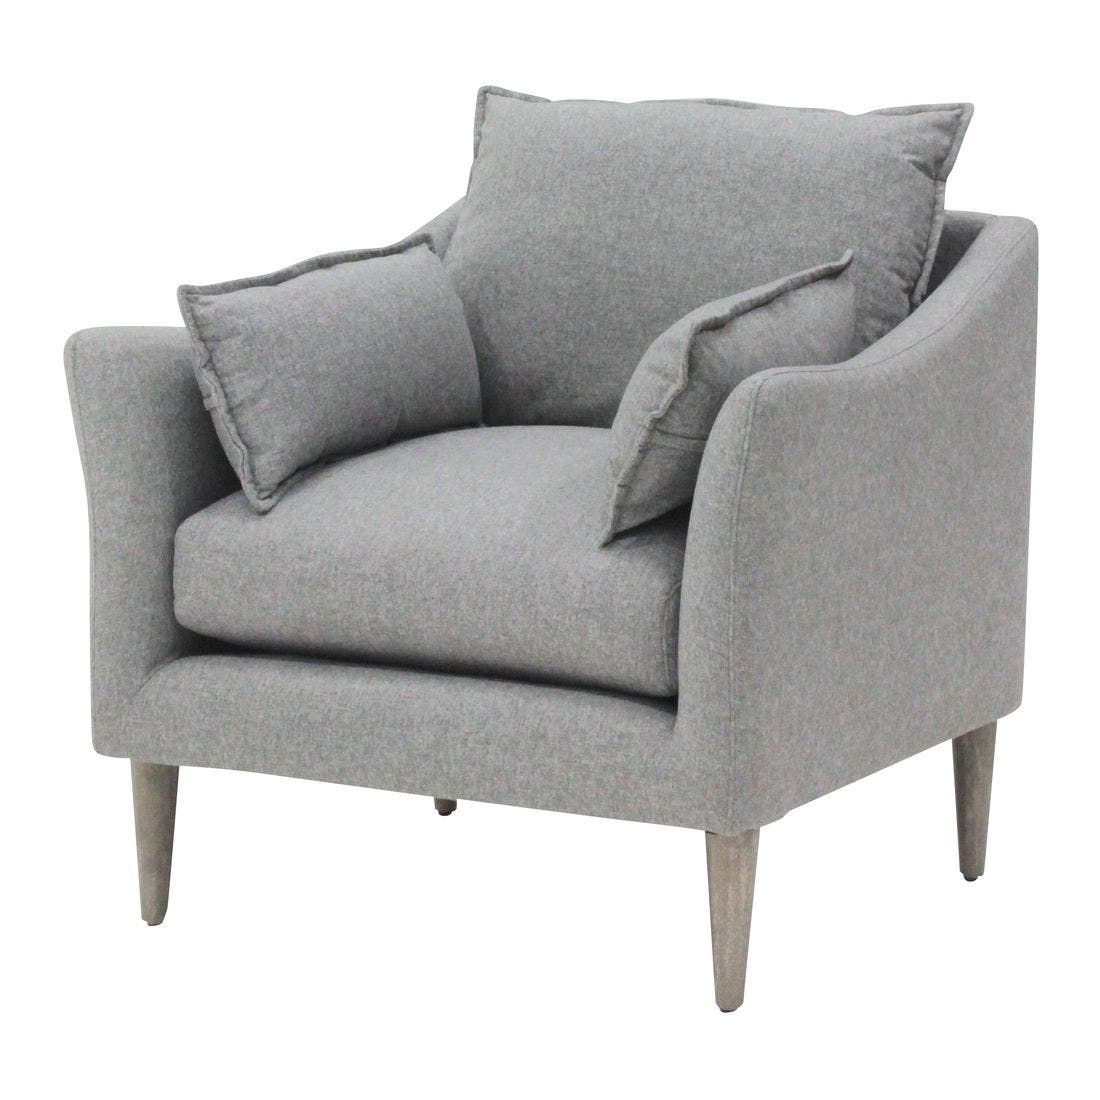 19151904-723503-775-furniture-sofa-recliner-sofas-01